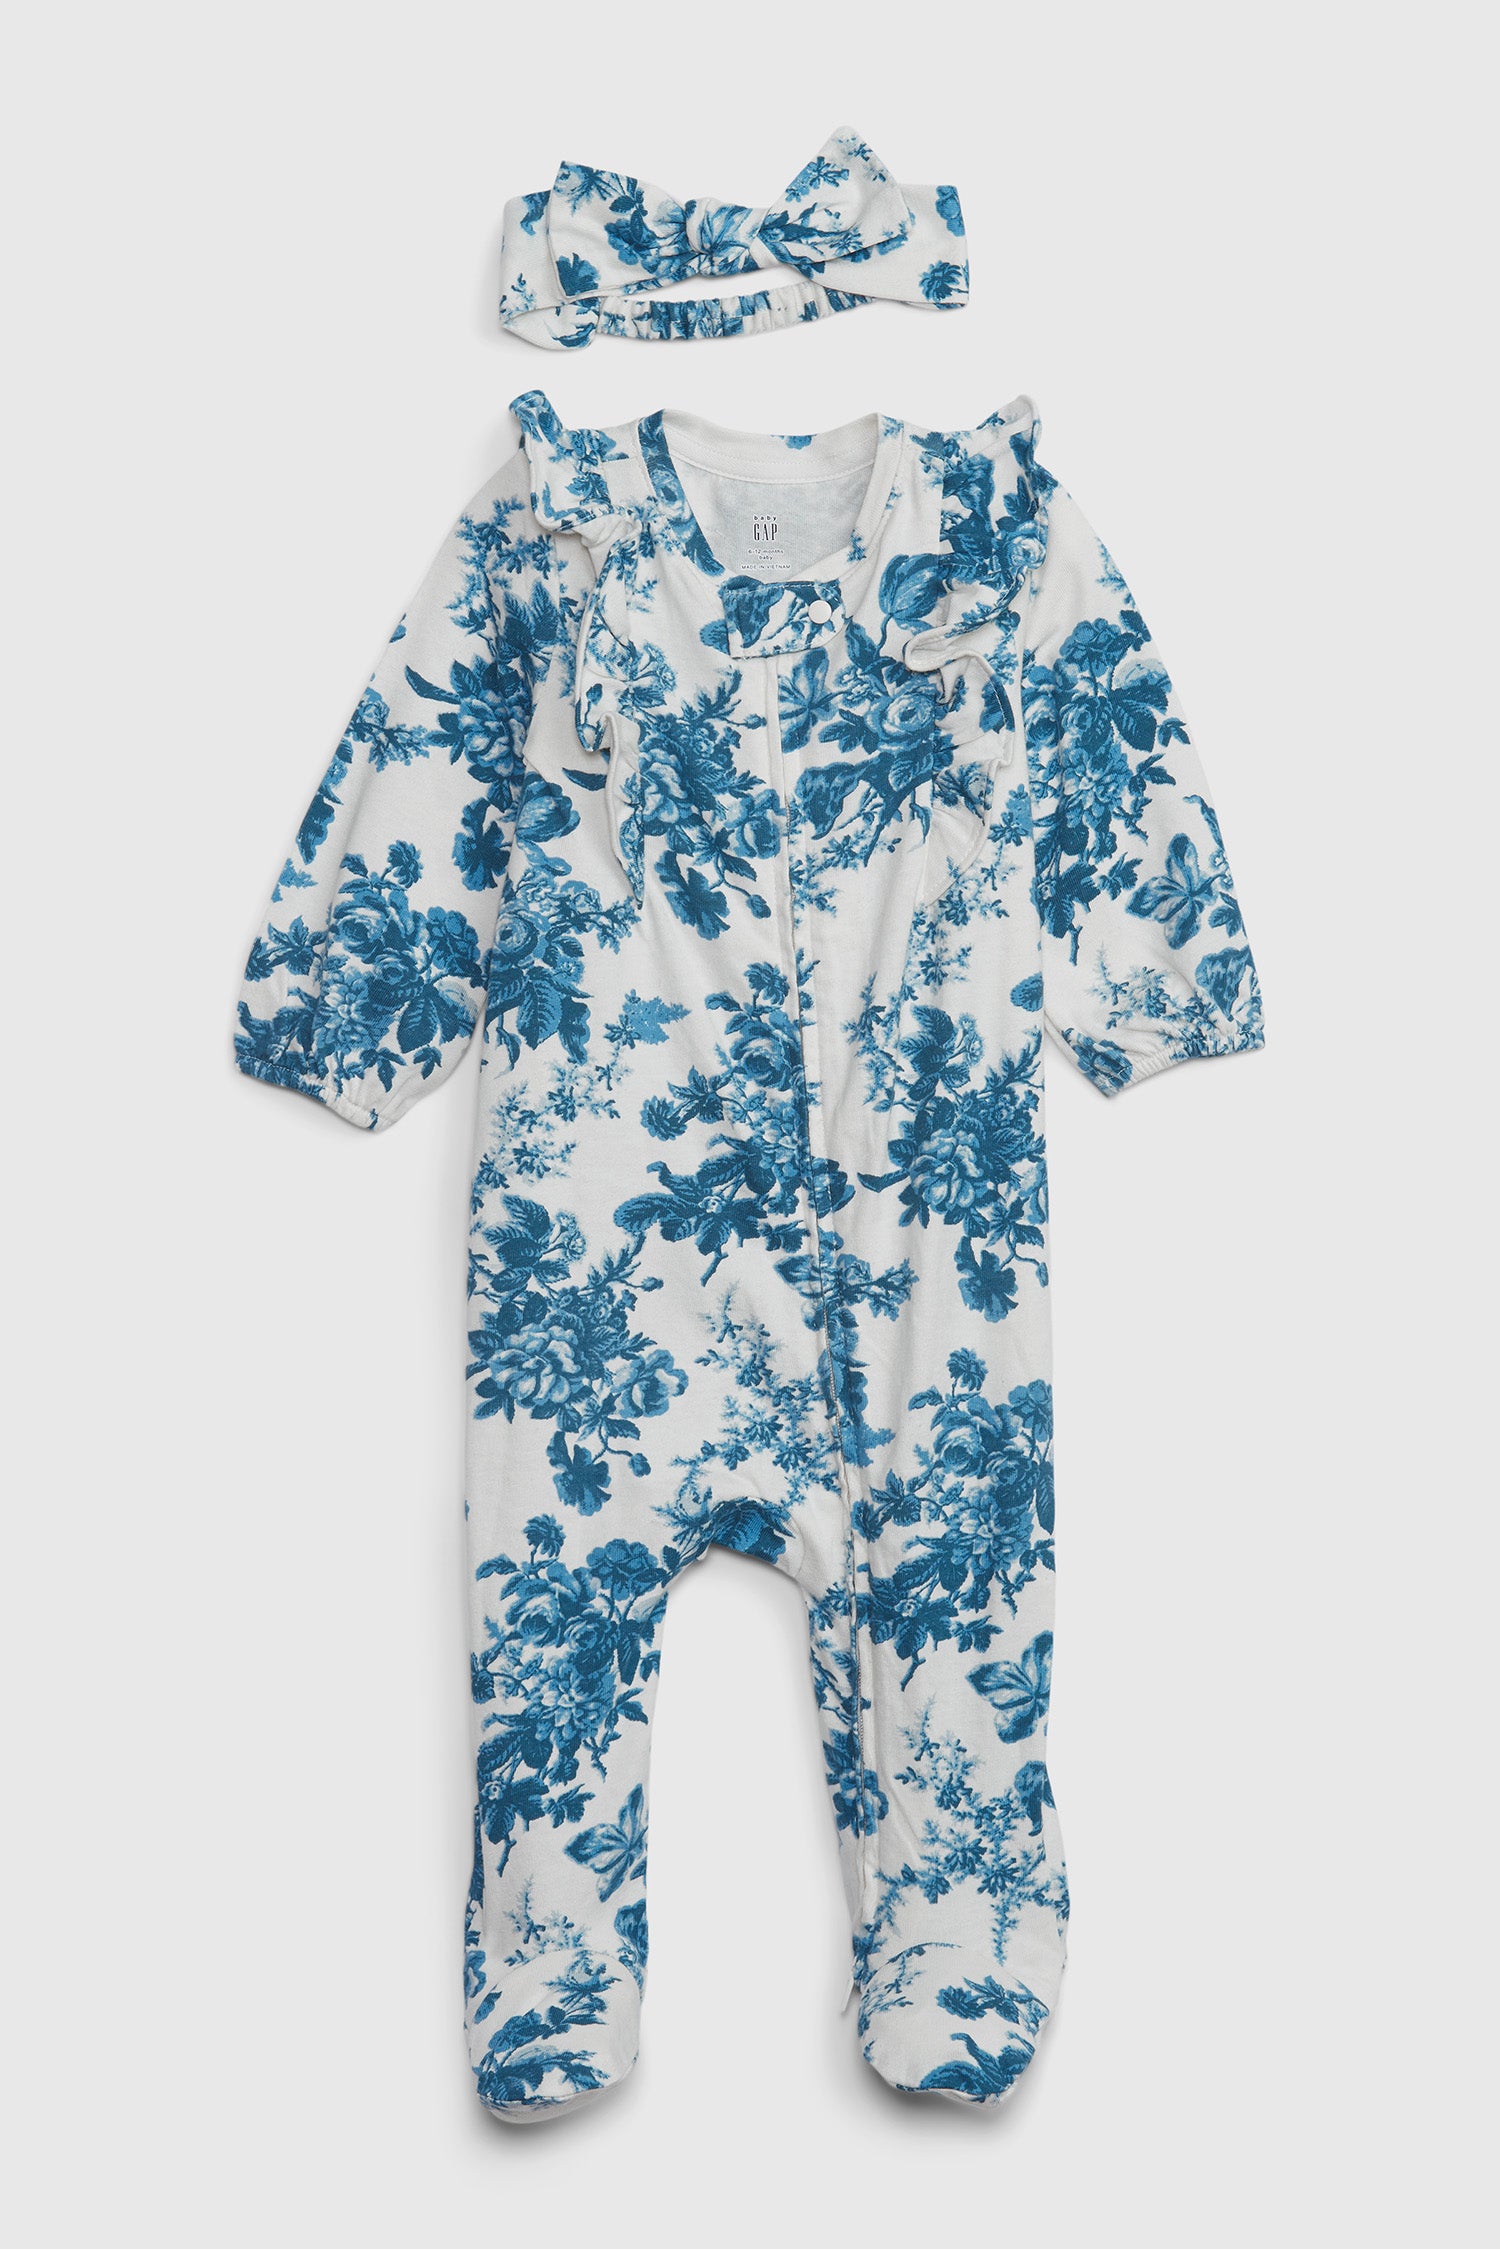 Baby's blue floral onesie.